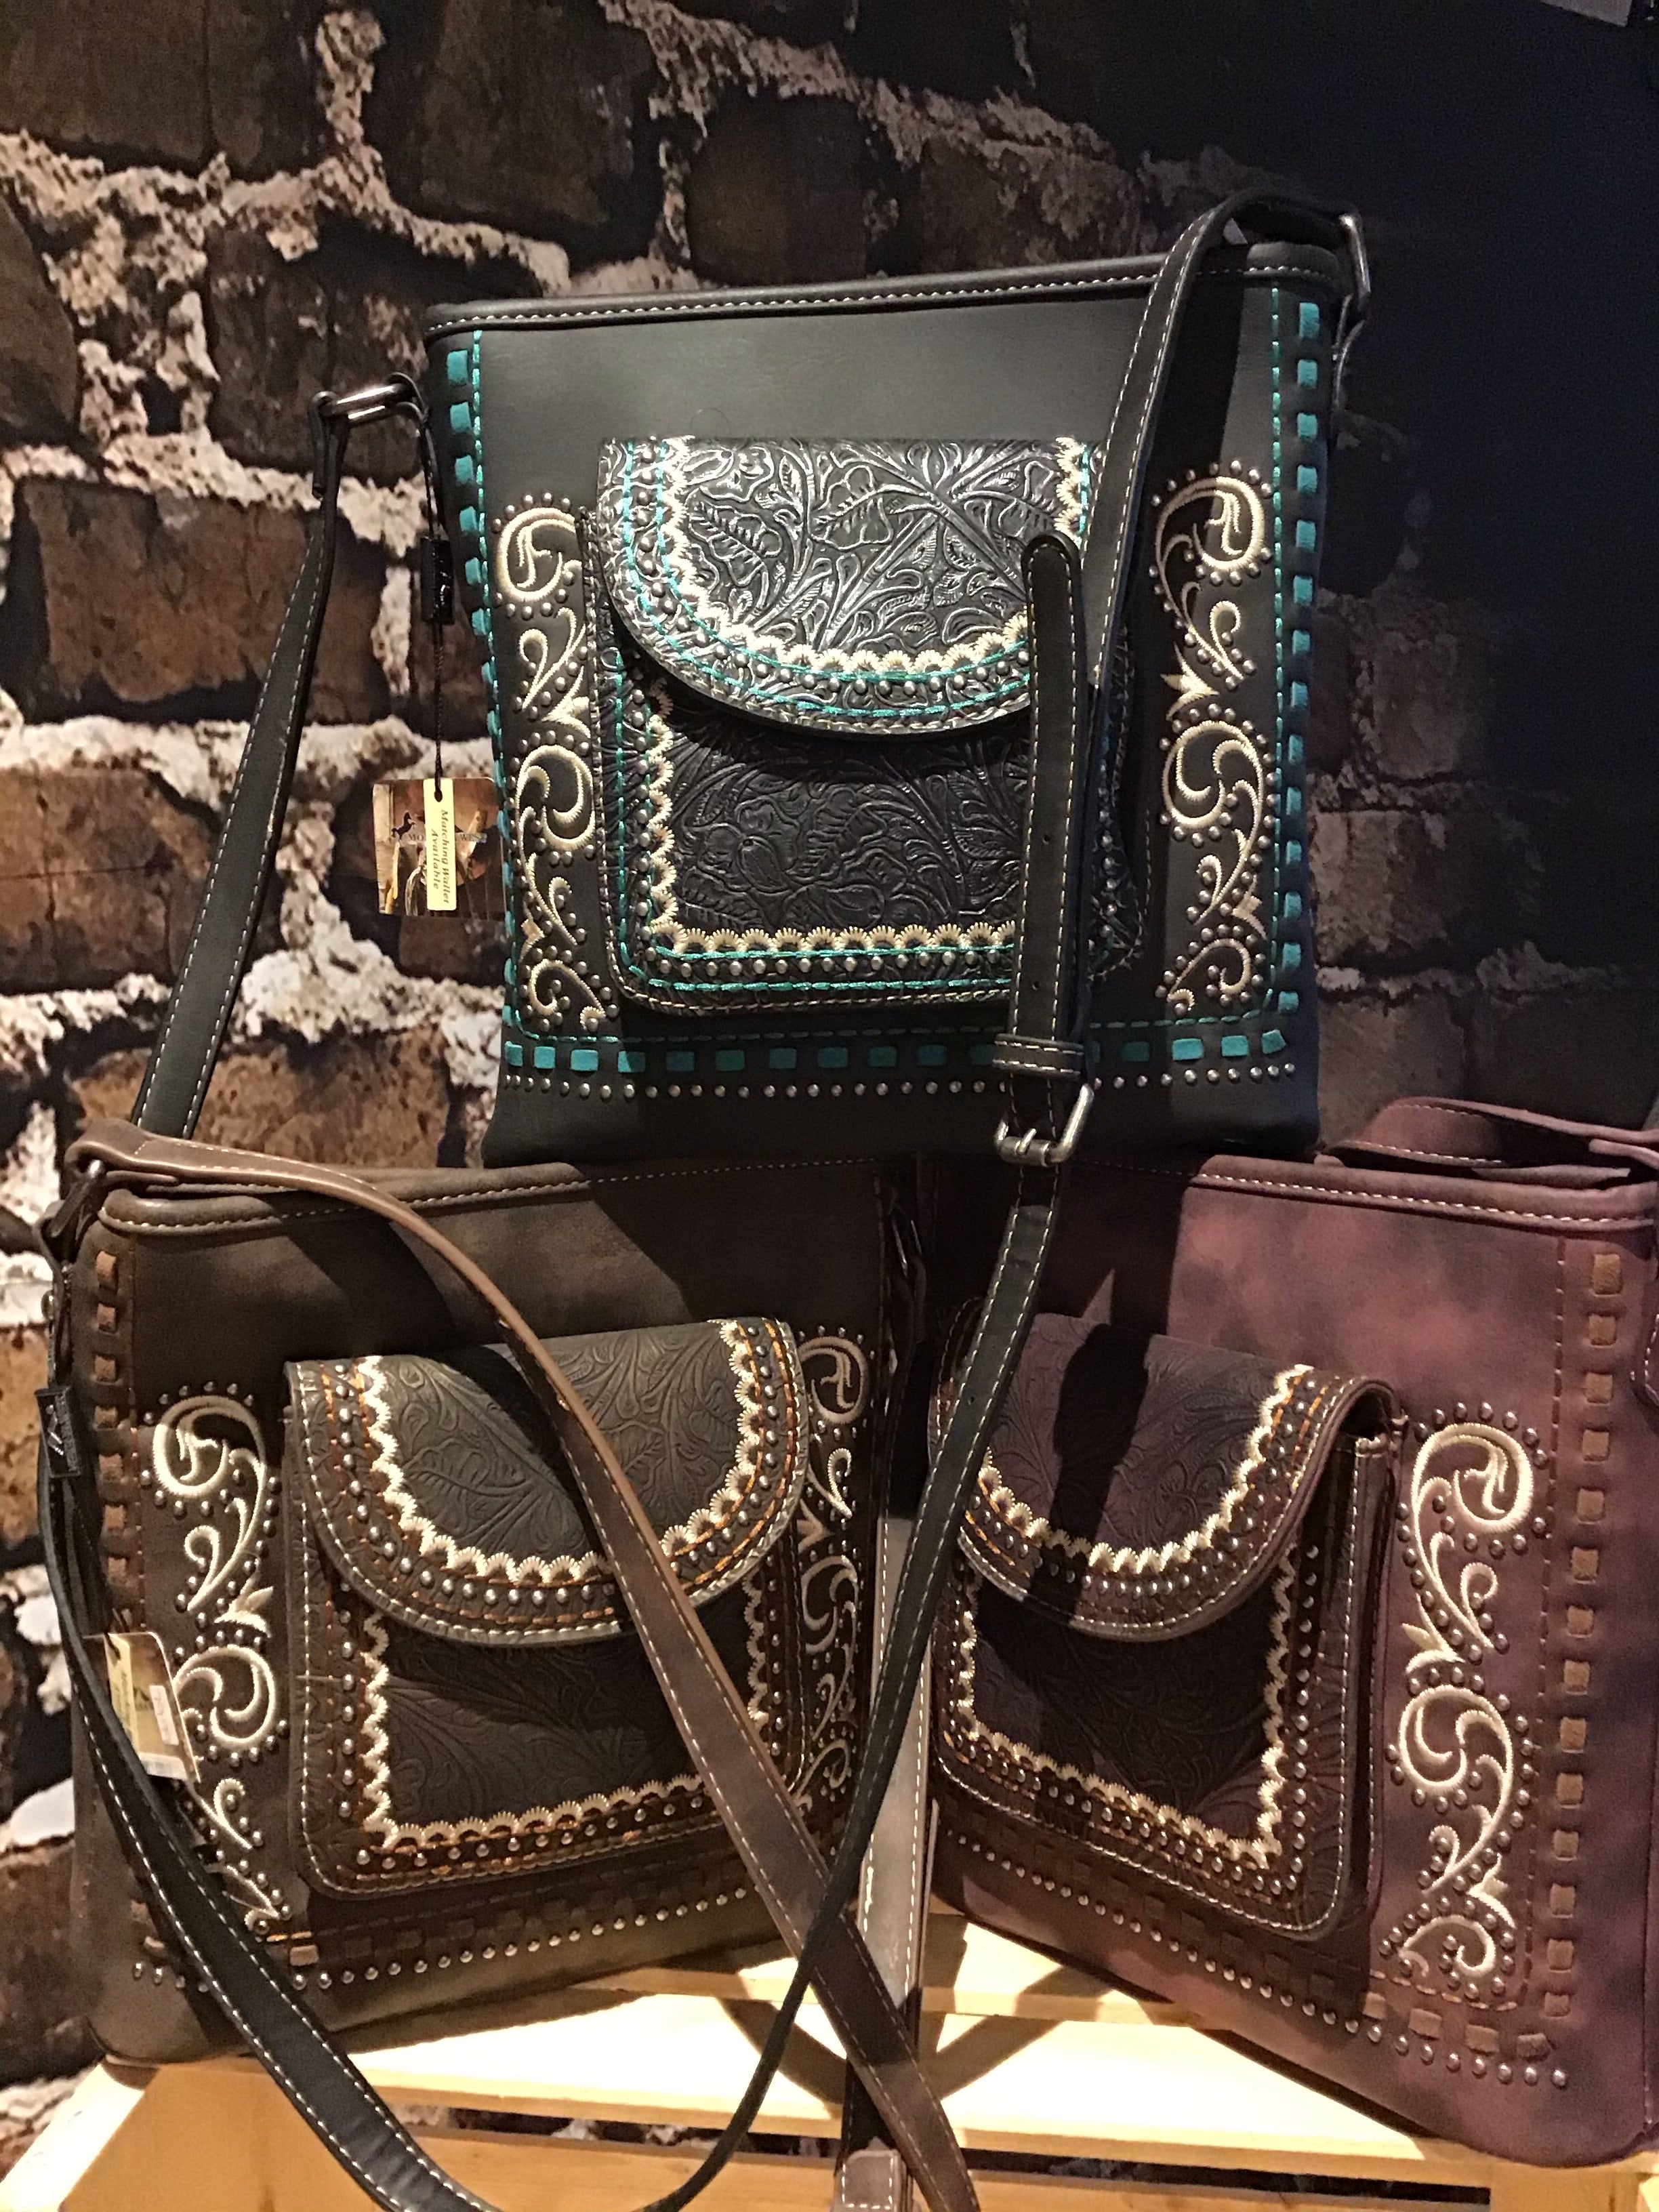 Tooled Collection Tote Embossed vintage Montana West handbag Saddle stitch purse